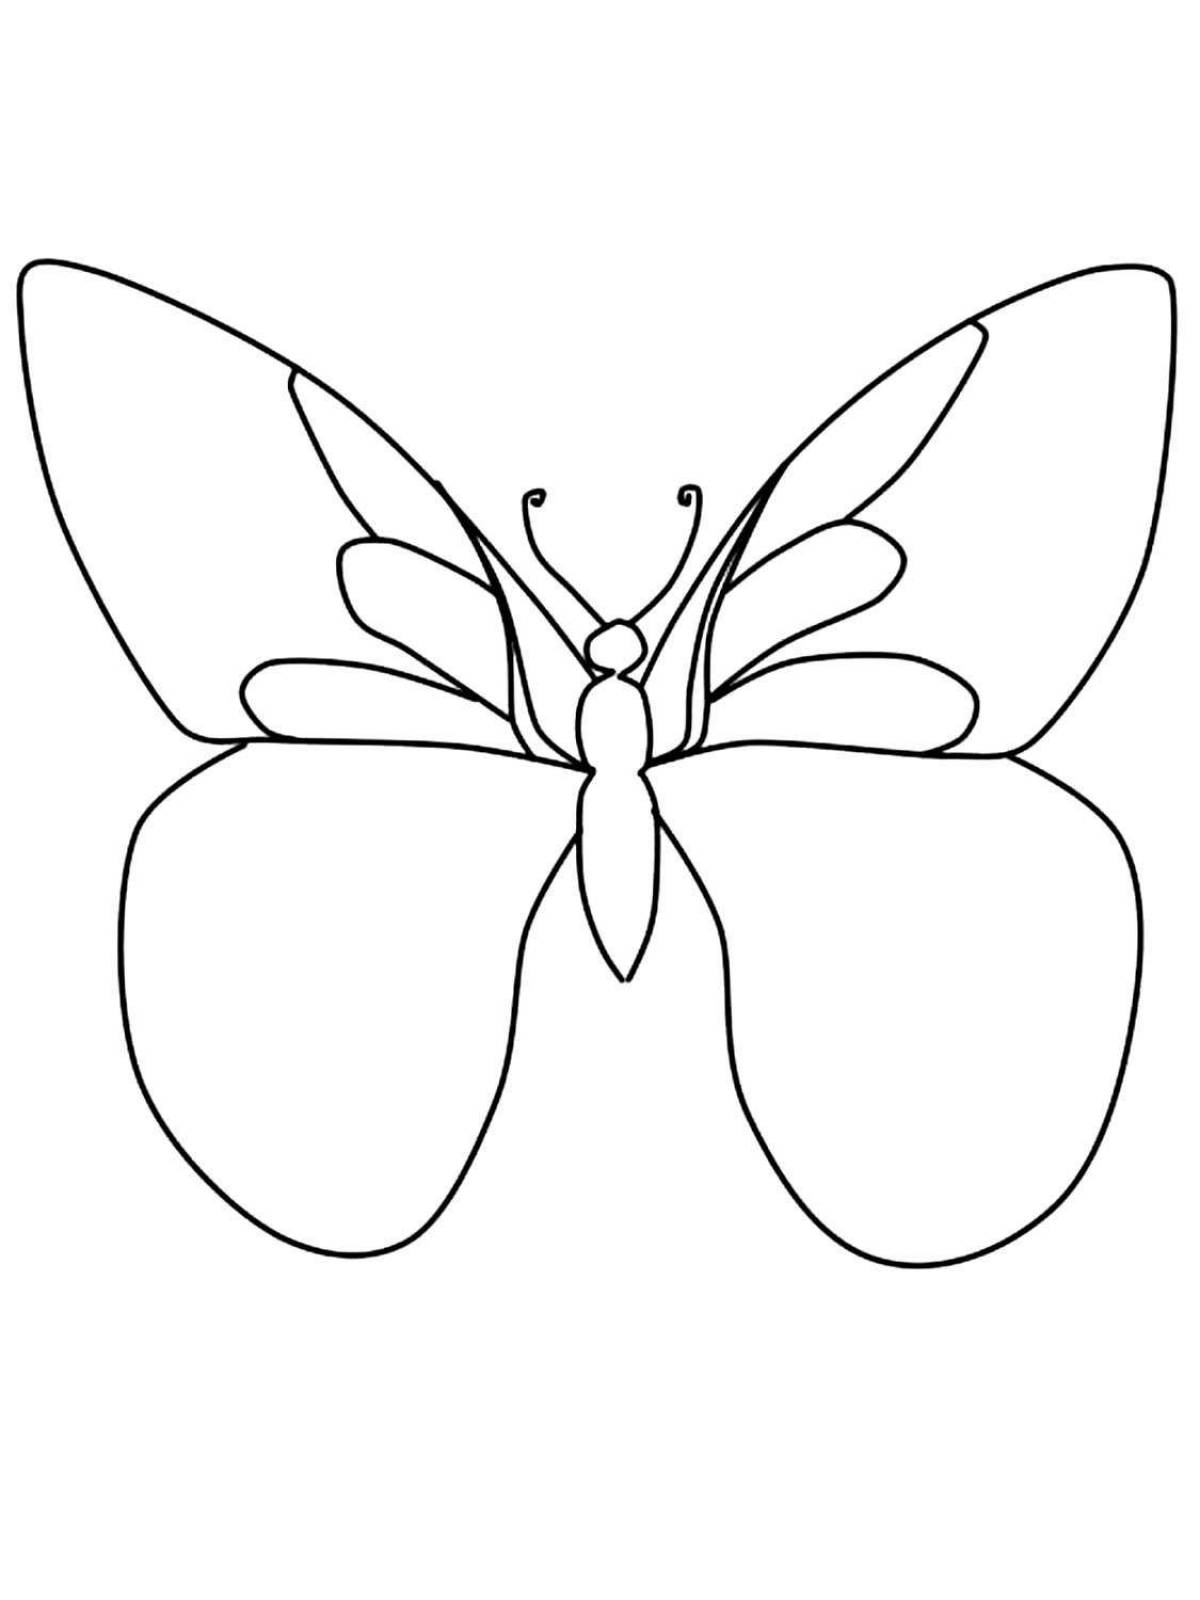 Раскраска изящная бабочка